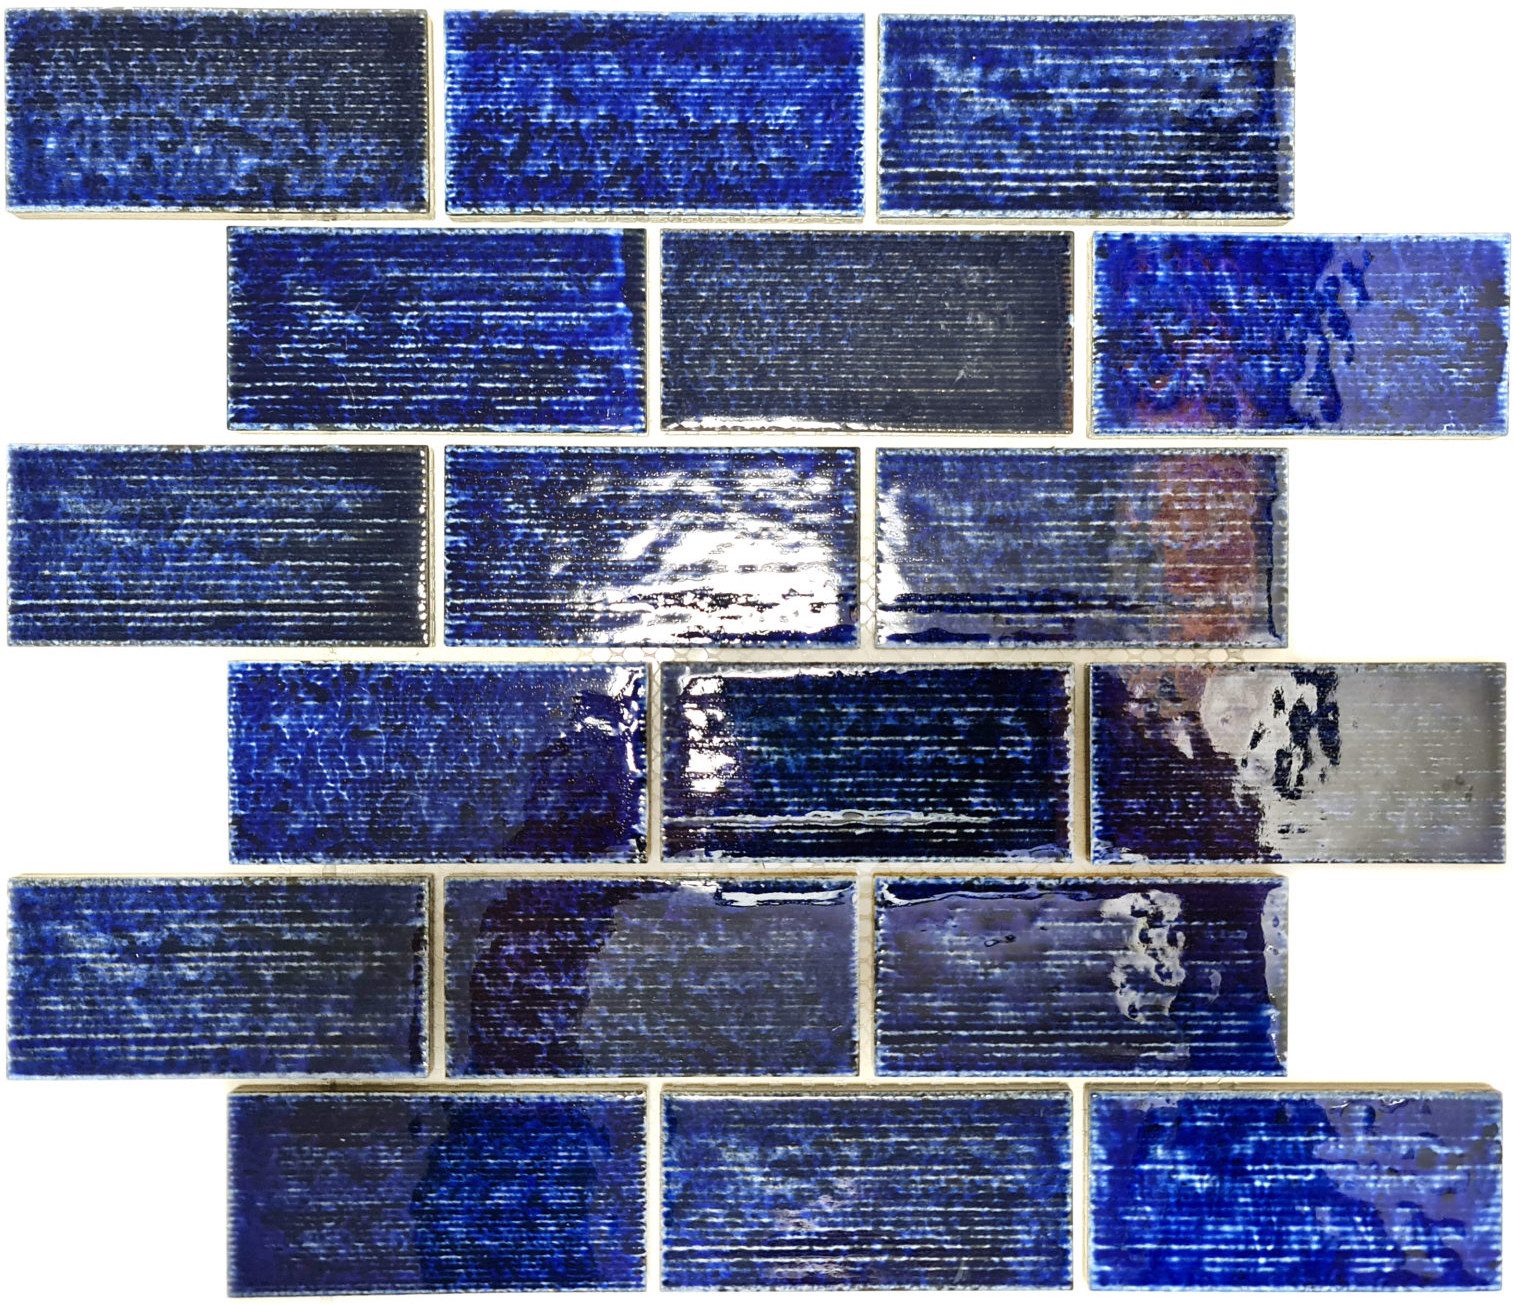 Mosani Mosaikfliesen Subway Mosaik Fliese Used Look Vintage blau